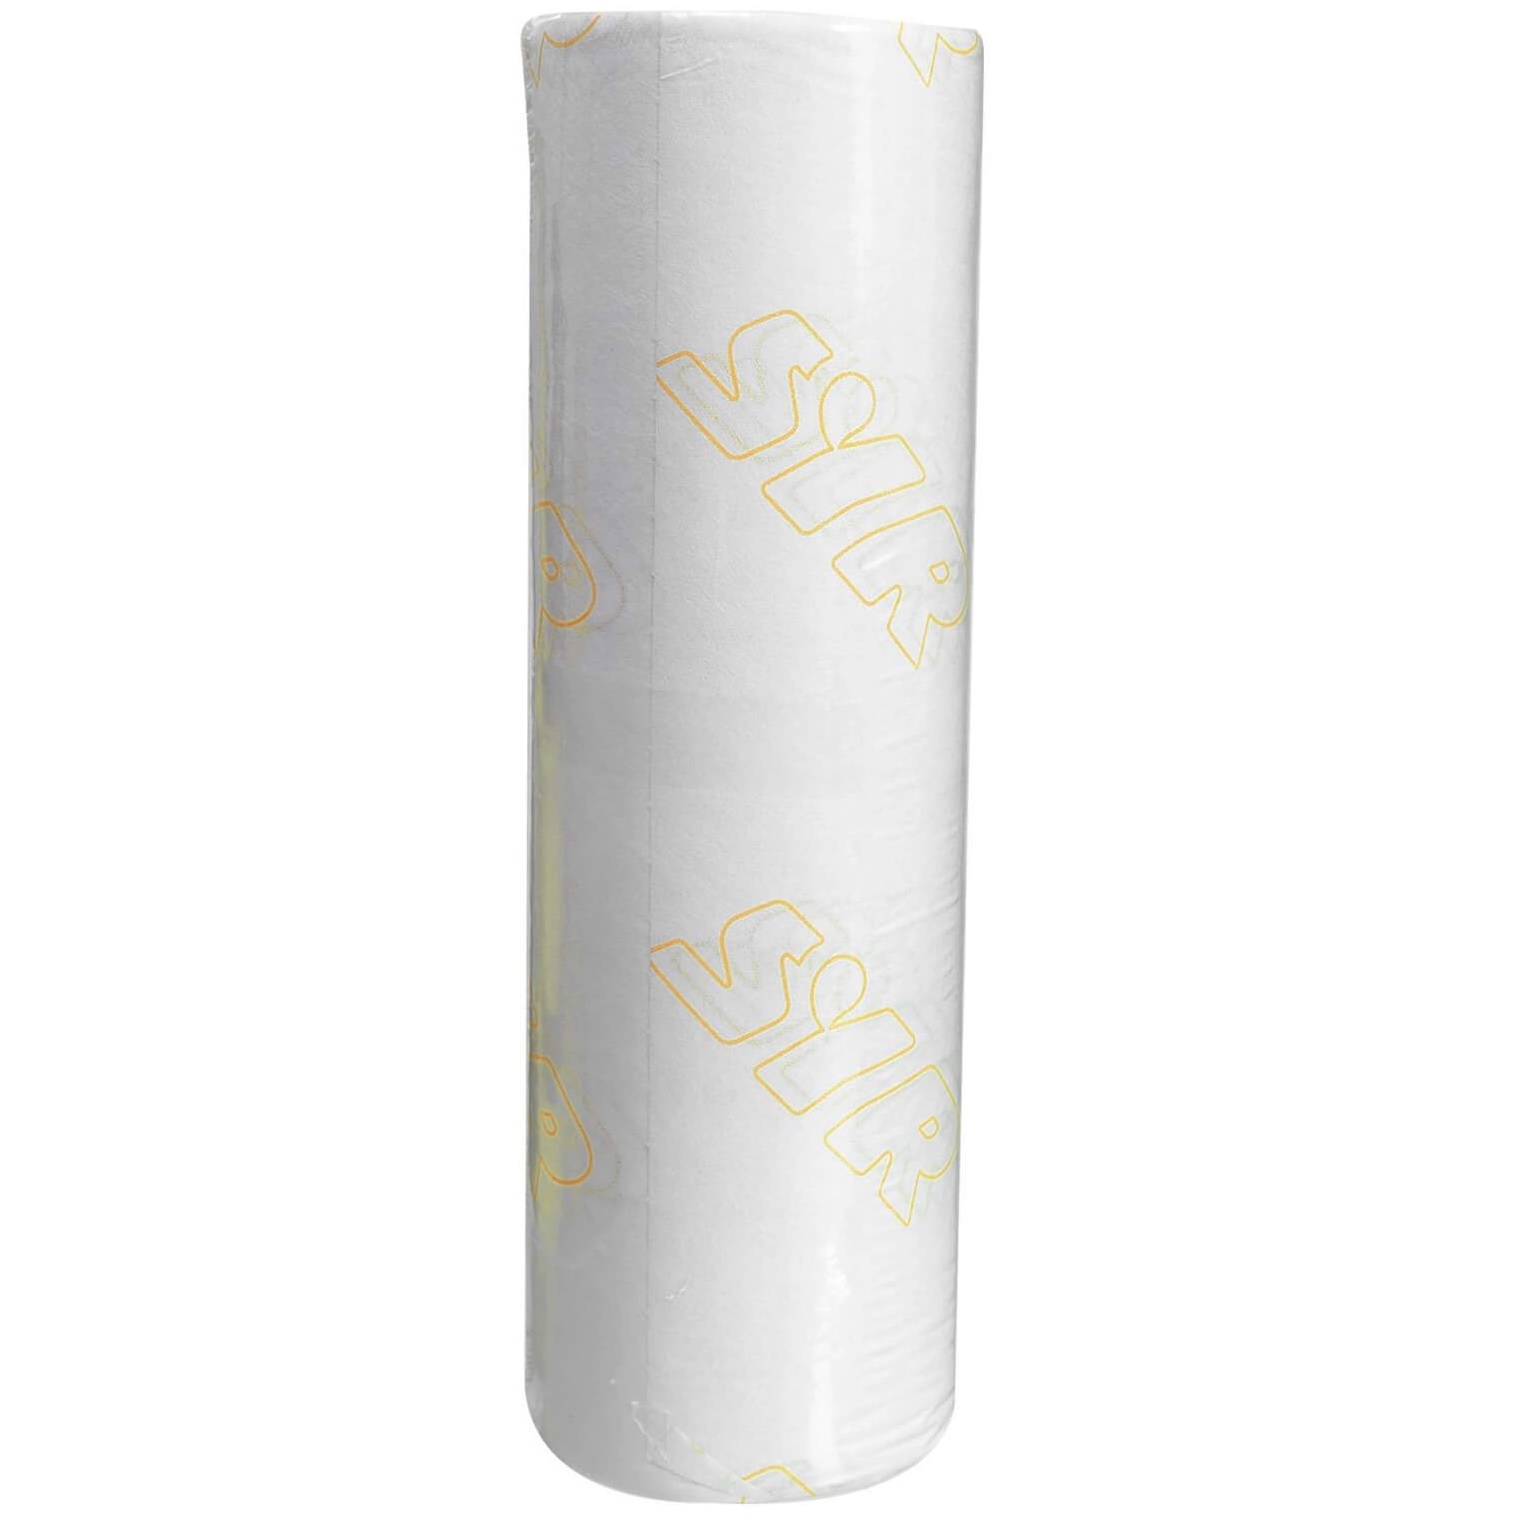 SYR-Microfibre-Cloth-Roll-100gsm-YELLOW-100sheet-x-6-rolls